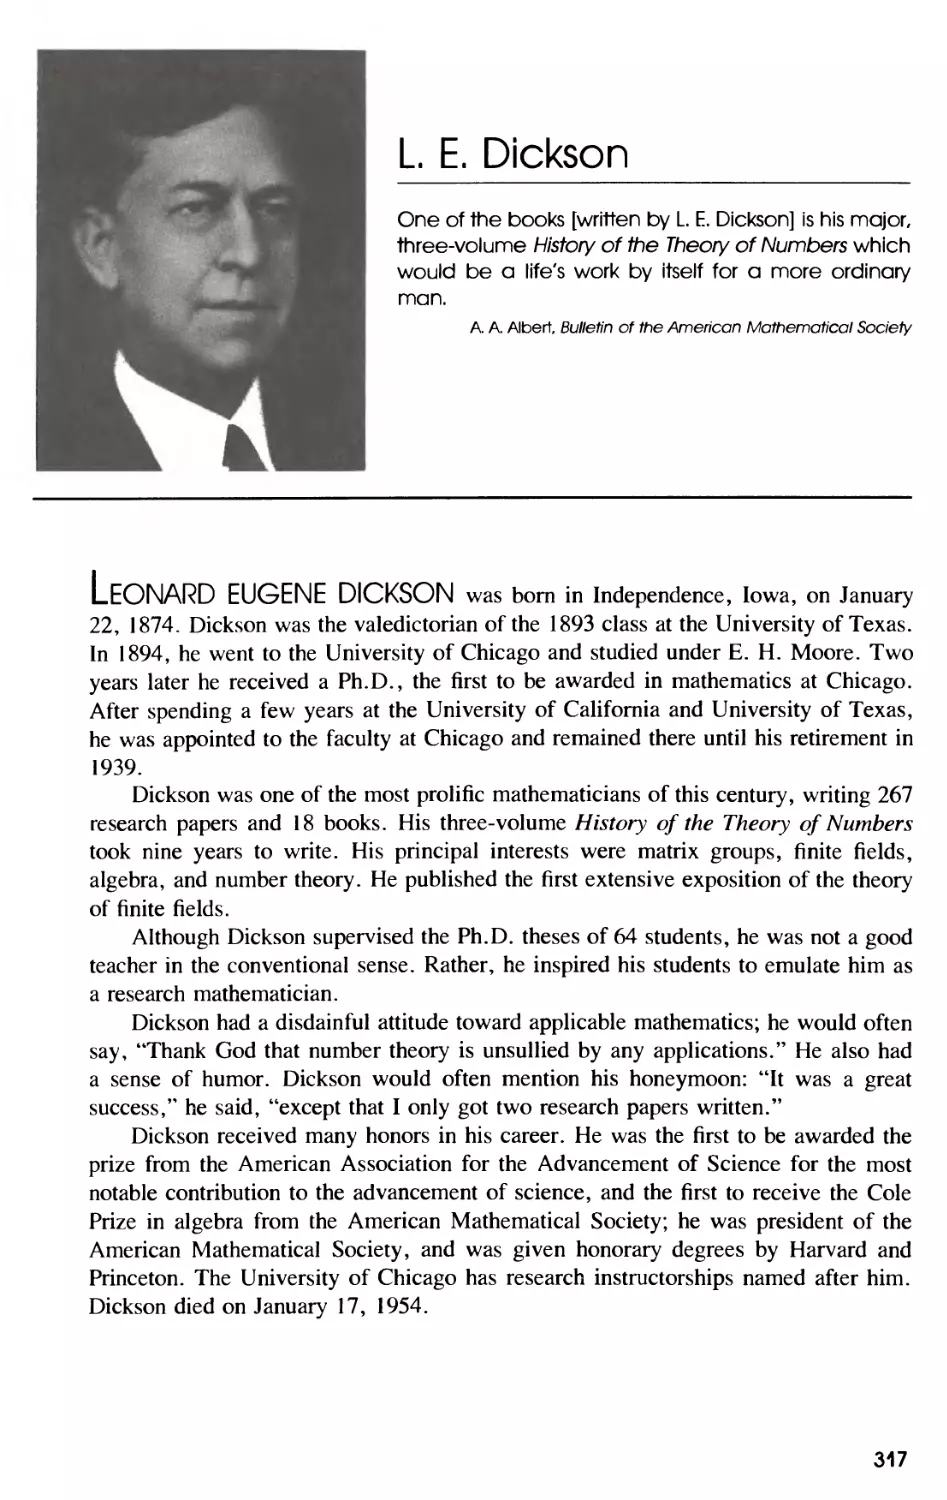 Biography ofL. E. Dickson